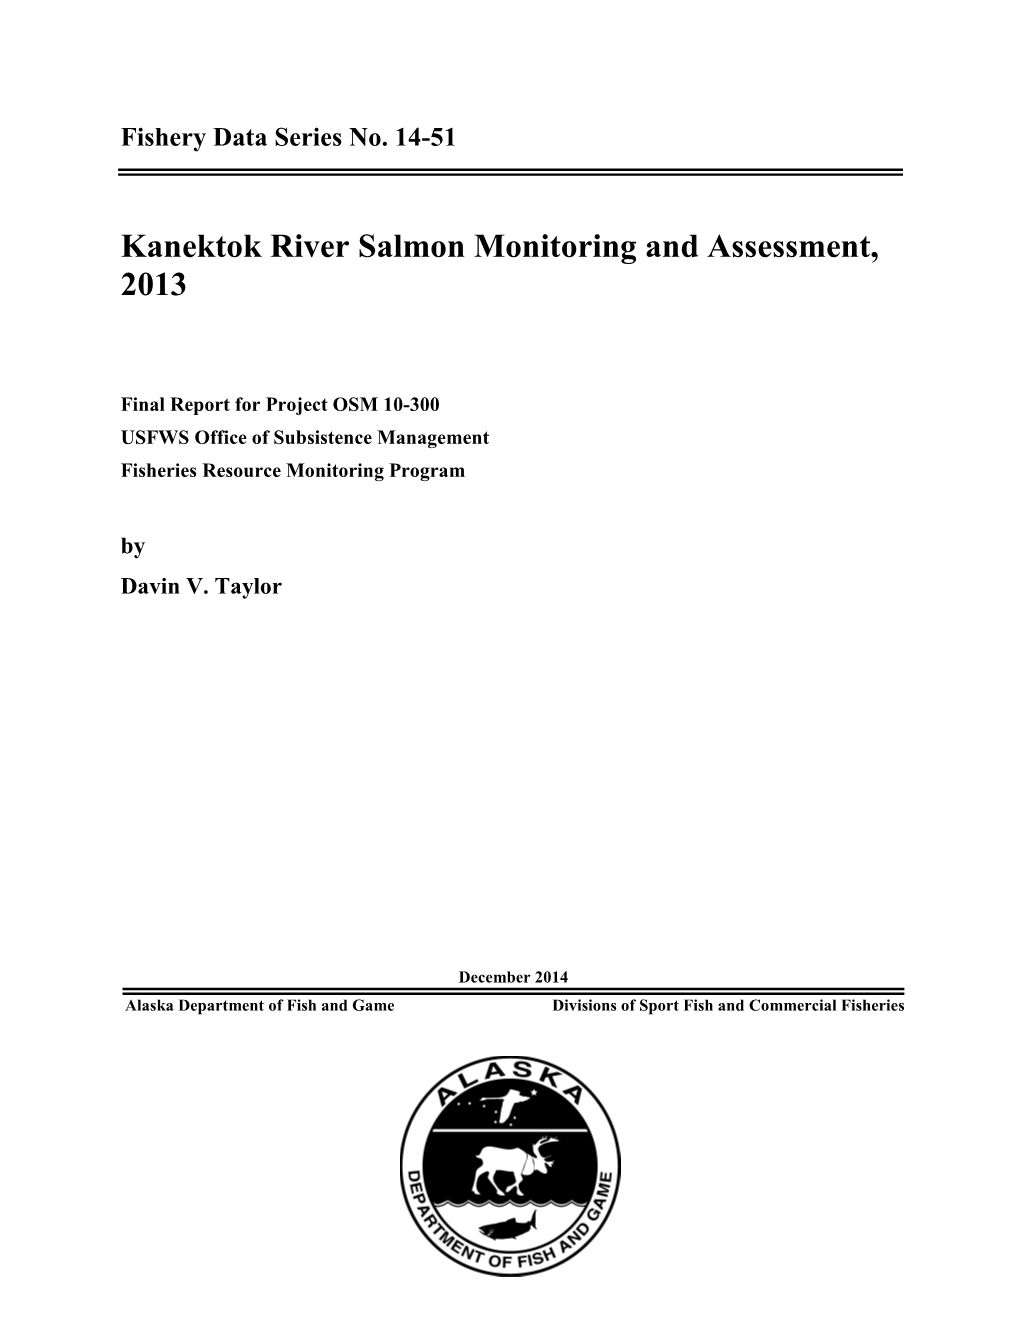 Kanektok River Salmon Monitoring and Assessment, 2013. Alaska Department of Fish and Game, Fishery Data Series No